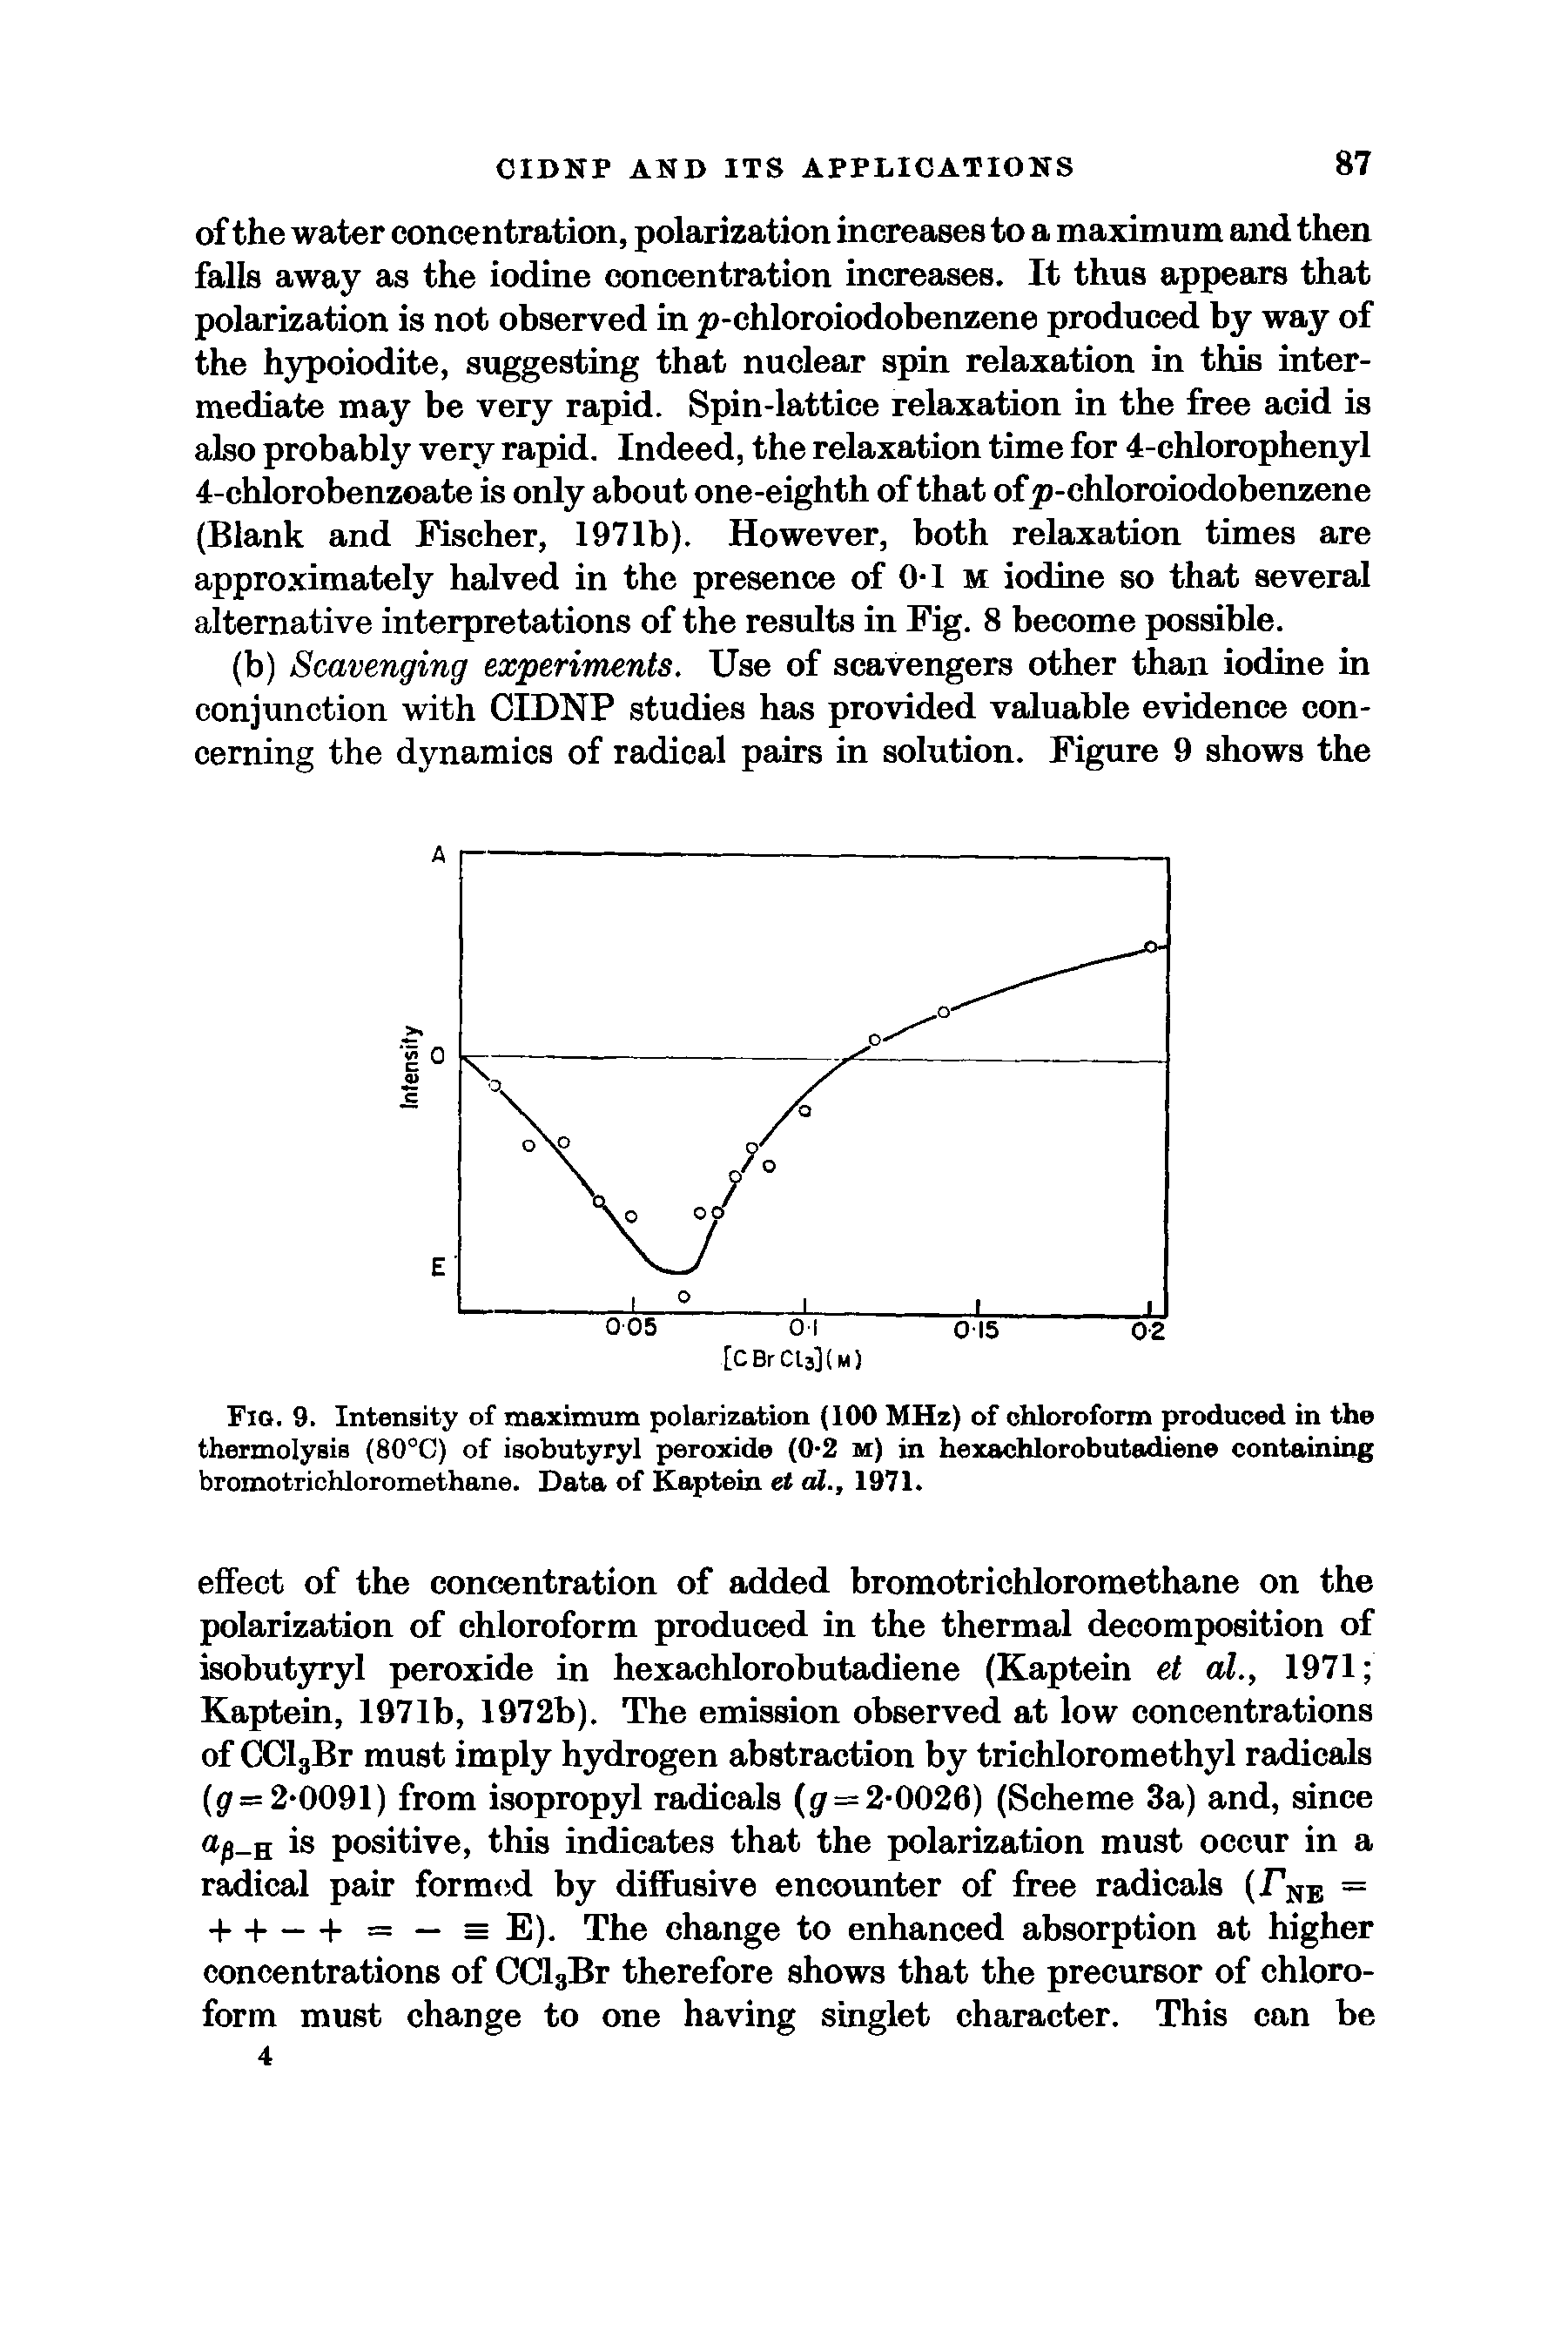 Fig. 9. Intensity of maximum polarization (100 MHz) of chloroform produced in the thermolysis (80°C) of isobutyryl peroxide (0-2 m) in hexachlorobutodiene containing bromotriohloromethane. Data of Kaptein et cU., 1971.